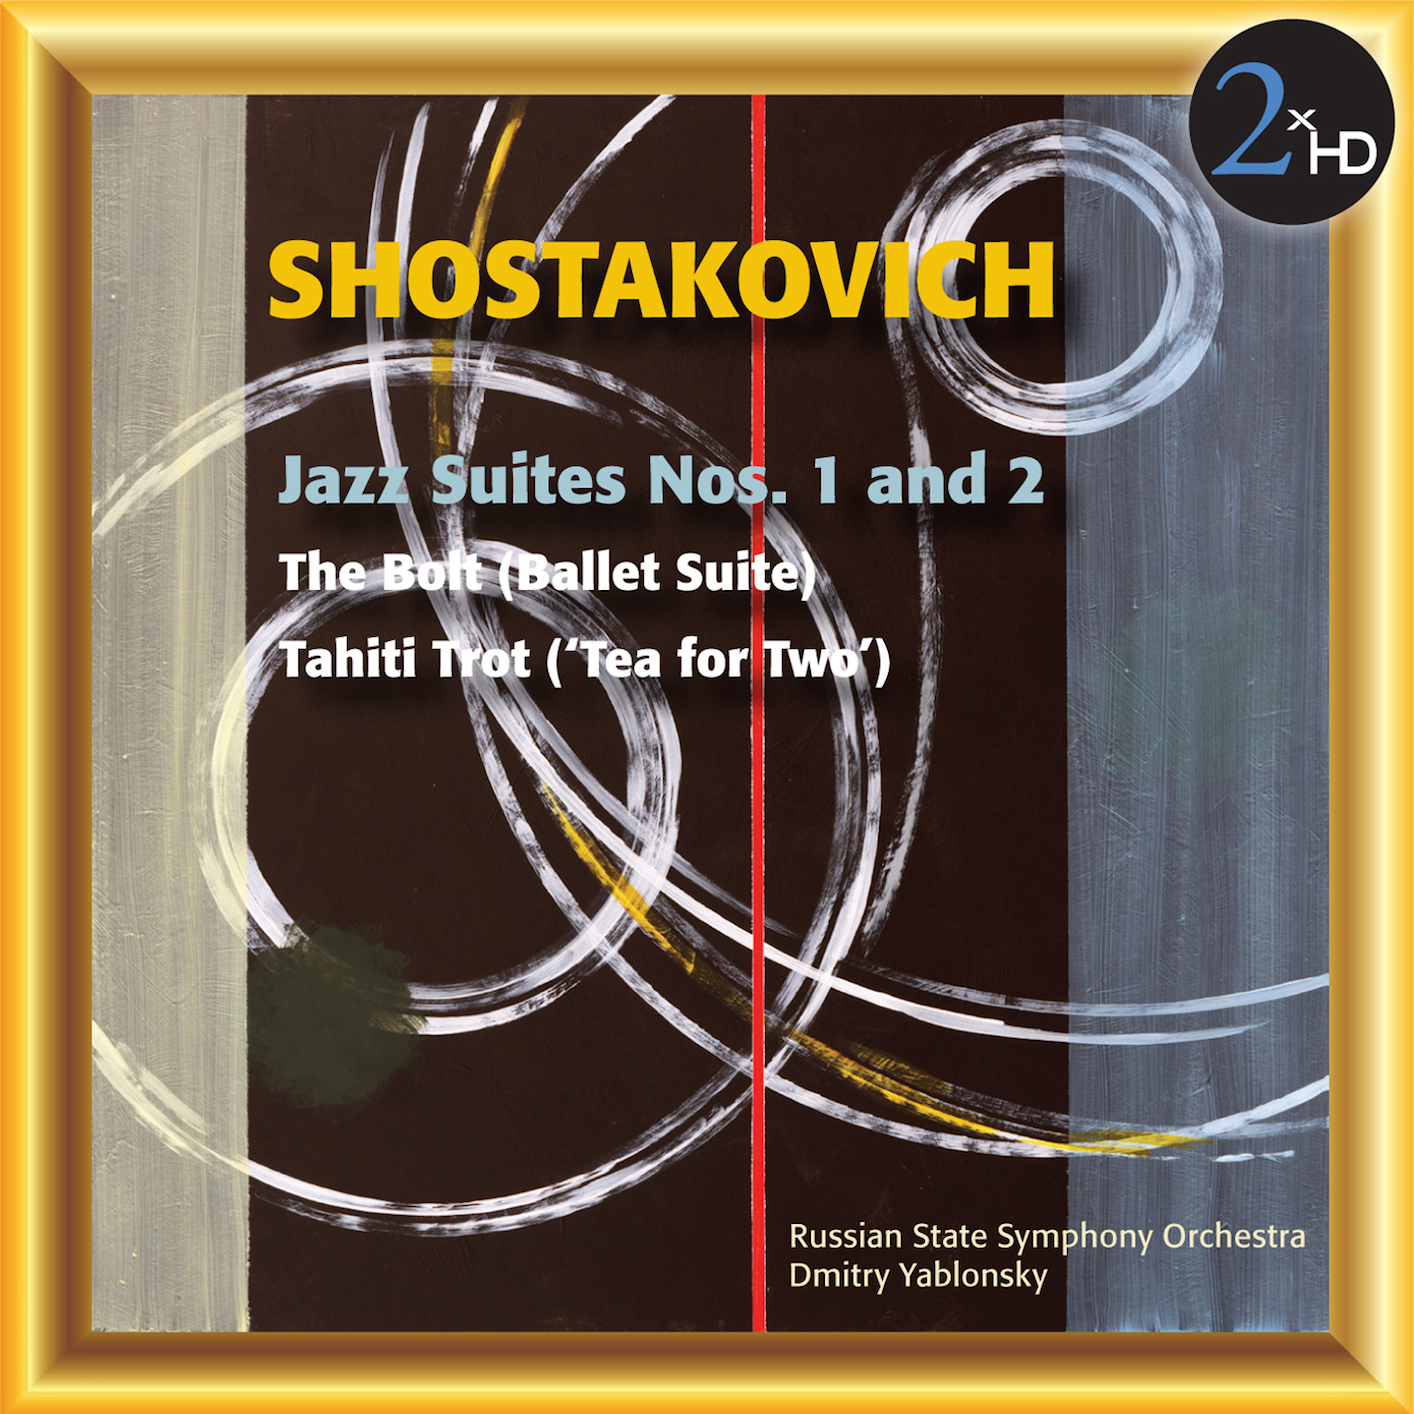 Russian State Symphony Orchestra & Dmitry Yablonsky - Shostakovich: Jazz Suites Nos. 1 and 2, Tahiti Trot (2008/2014) [FLAC 24bit/192kHz]